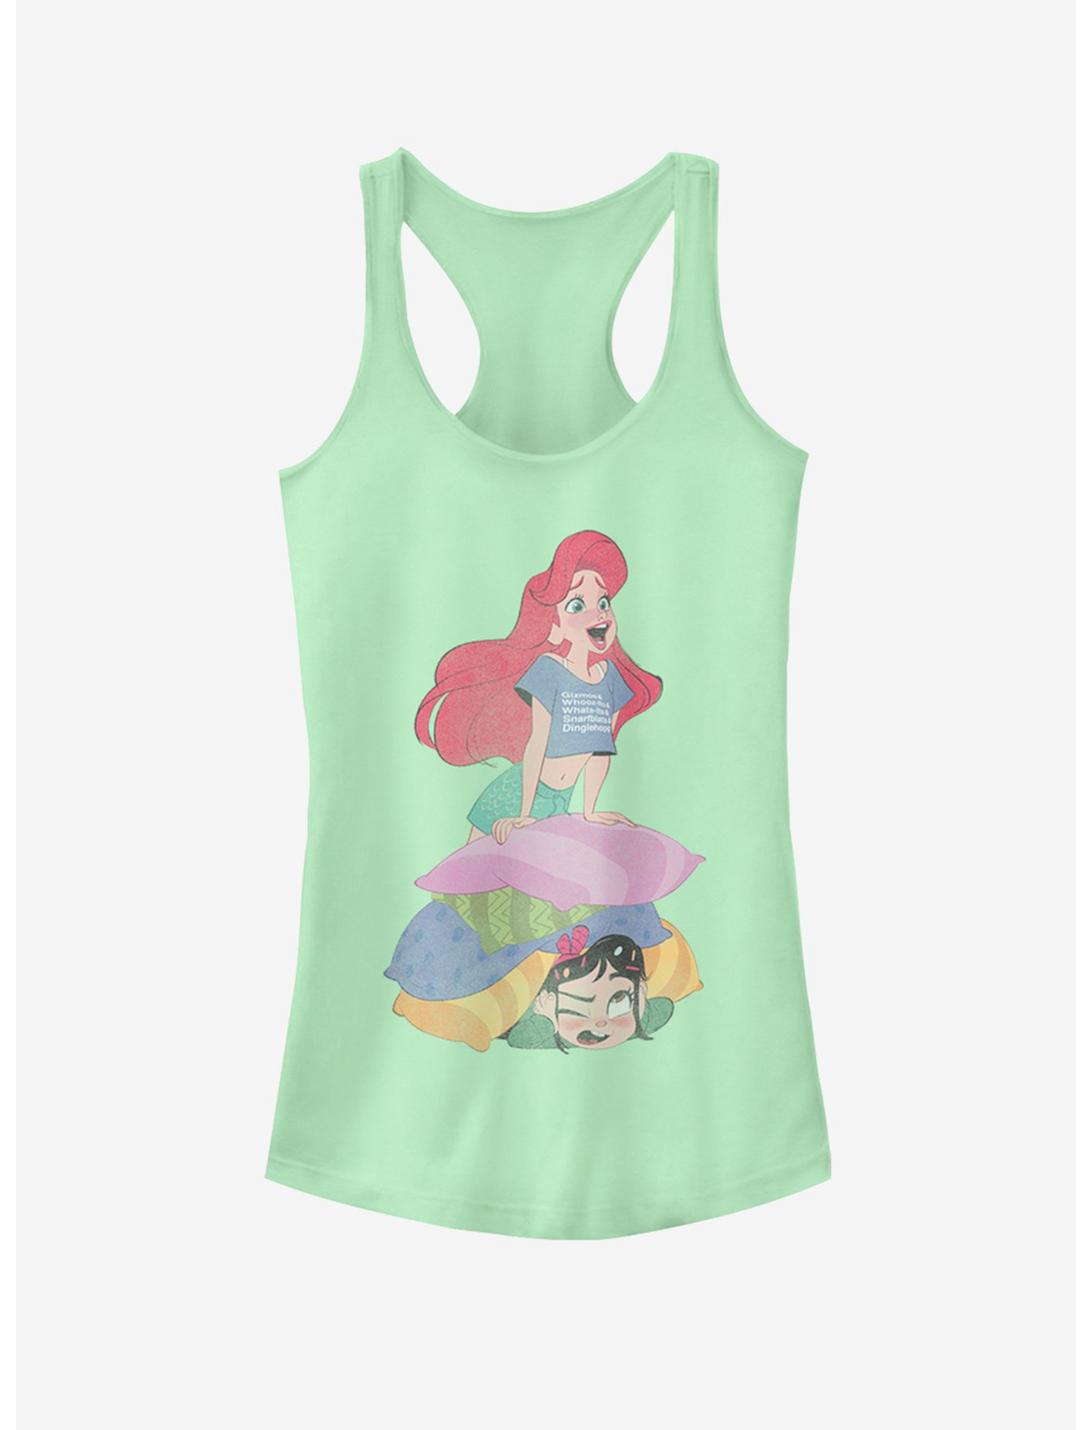 Disney Ralph Breaks The Internet Singing Princess Ariel Girls Tank Top, MINT, hi-res